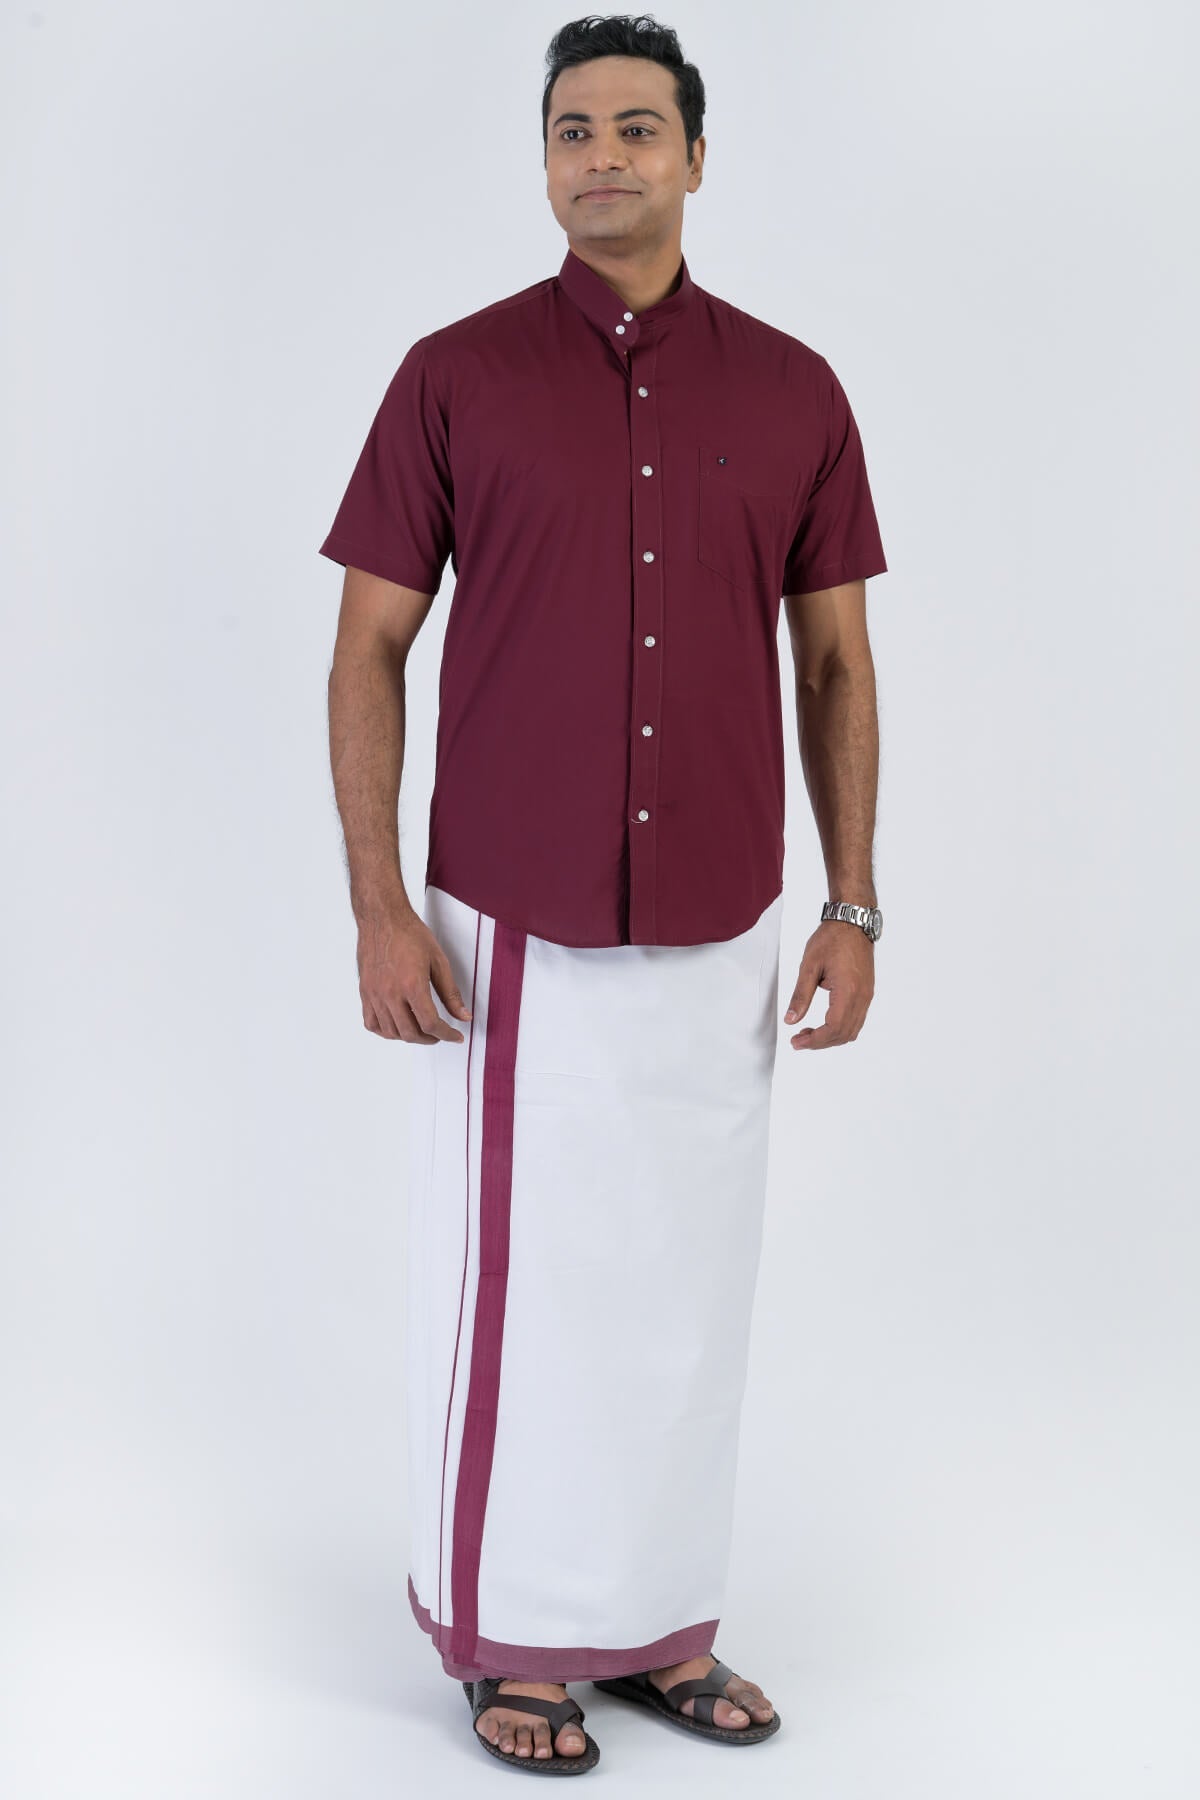 Combo Men's Premium Cotton Dhoti with Maroon Shirt